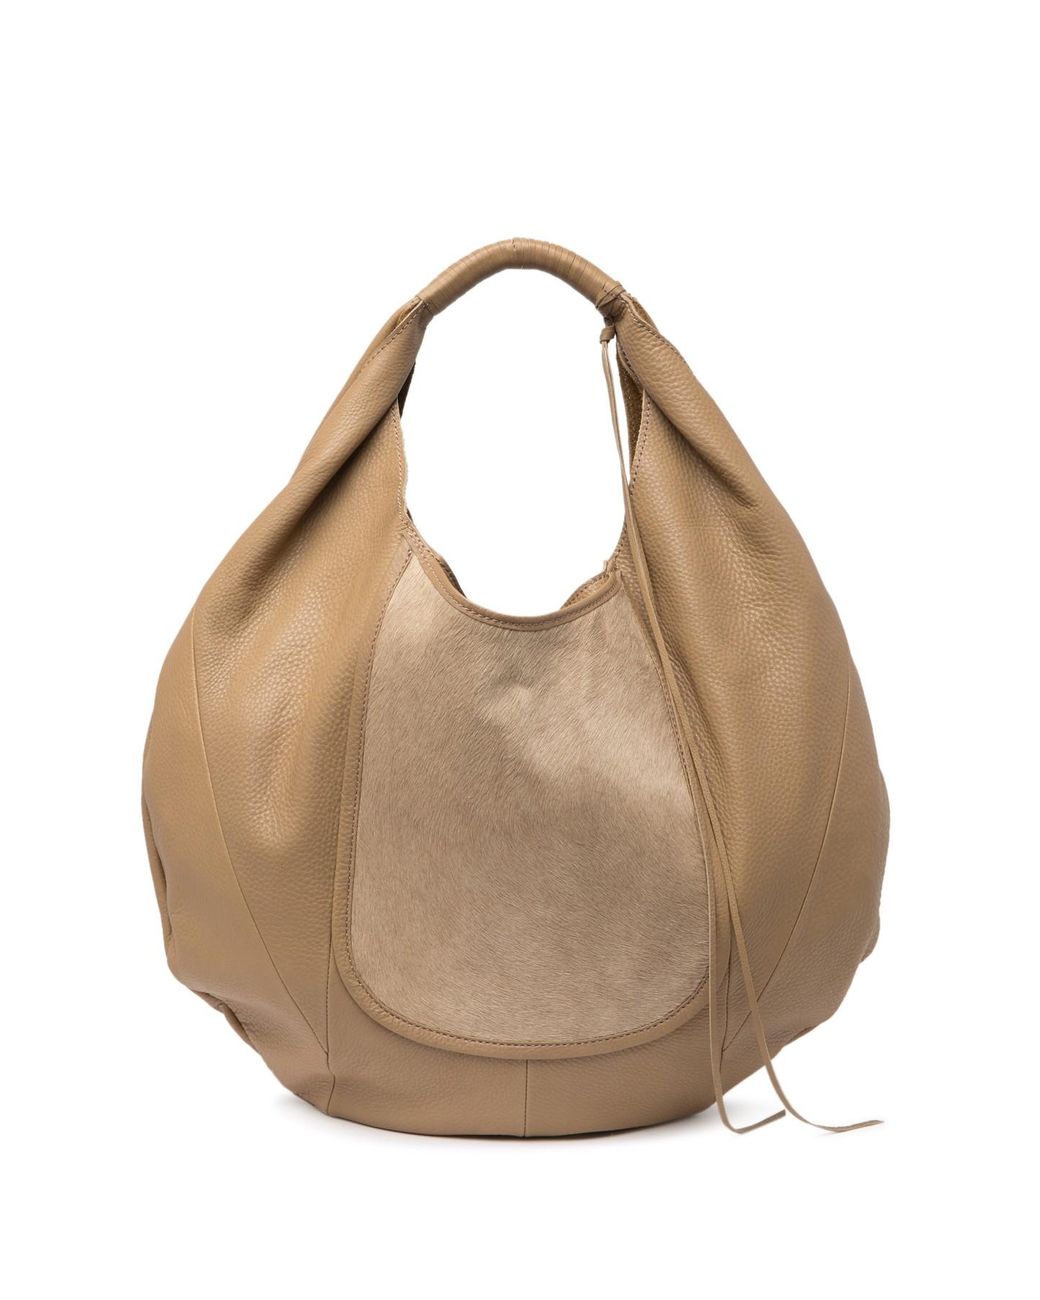 Hobo Eclipse Leather & Genuine Calf Hair Shoulder Bag in Brown - Lyst